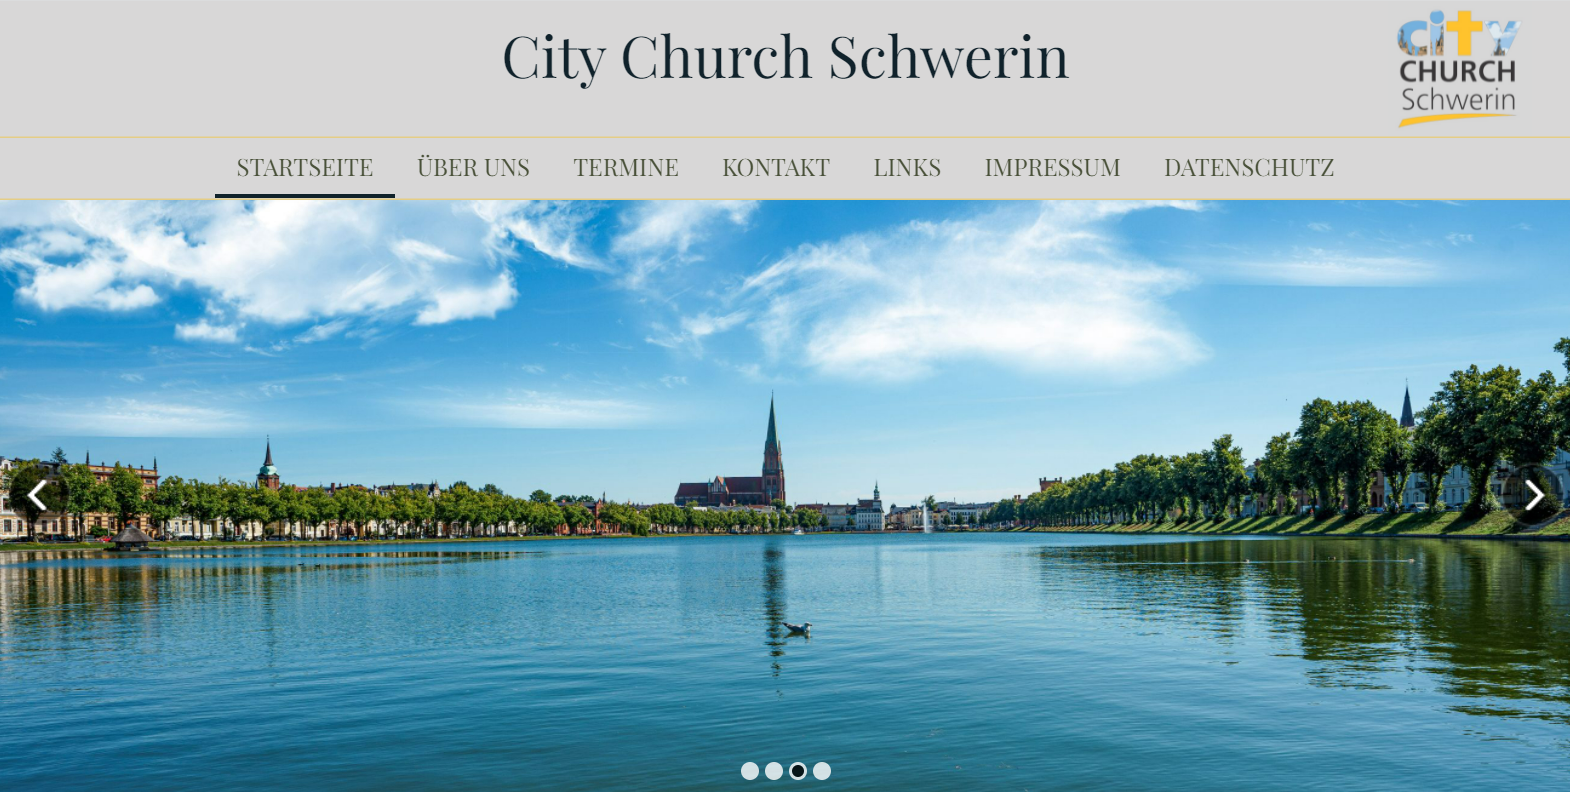 City Church Schwerin